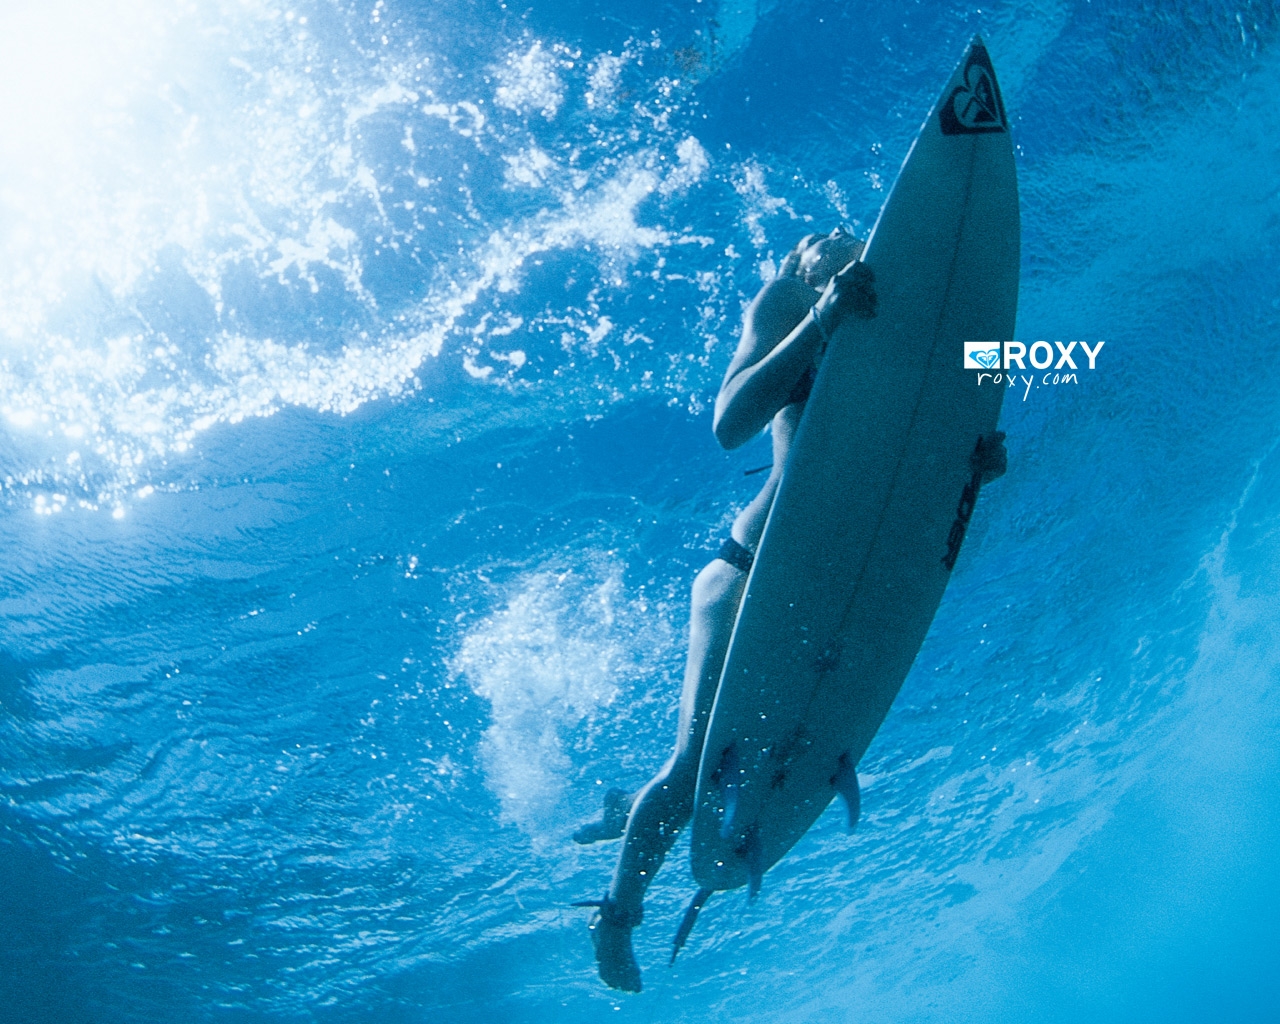 roxy wallpaper,surfing  equipment,surfing,boardsport,wakesurfing,skimboarding (#423250) -  WallpaperUse